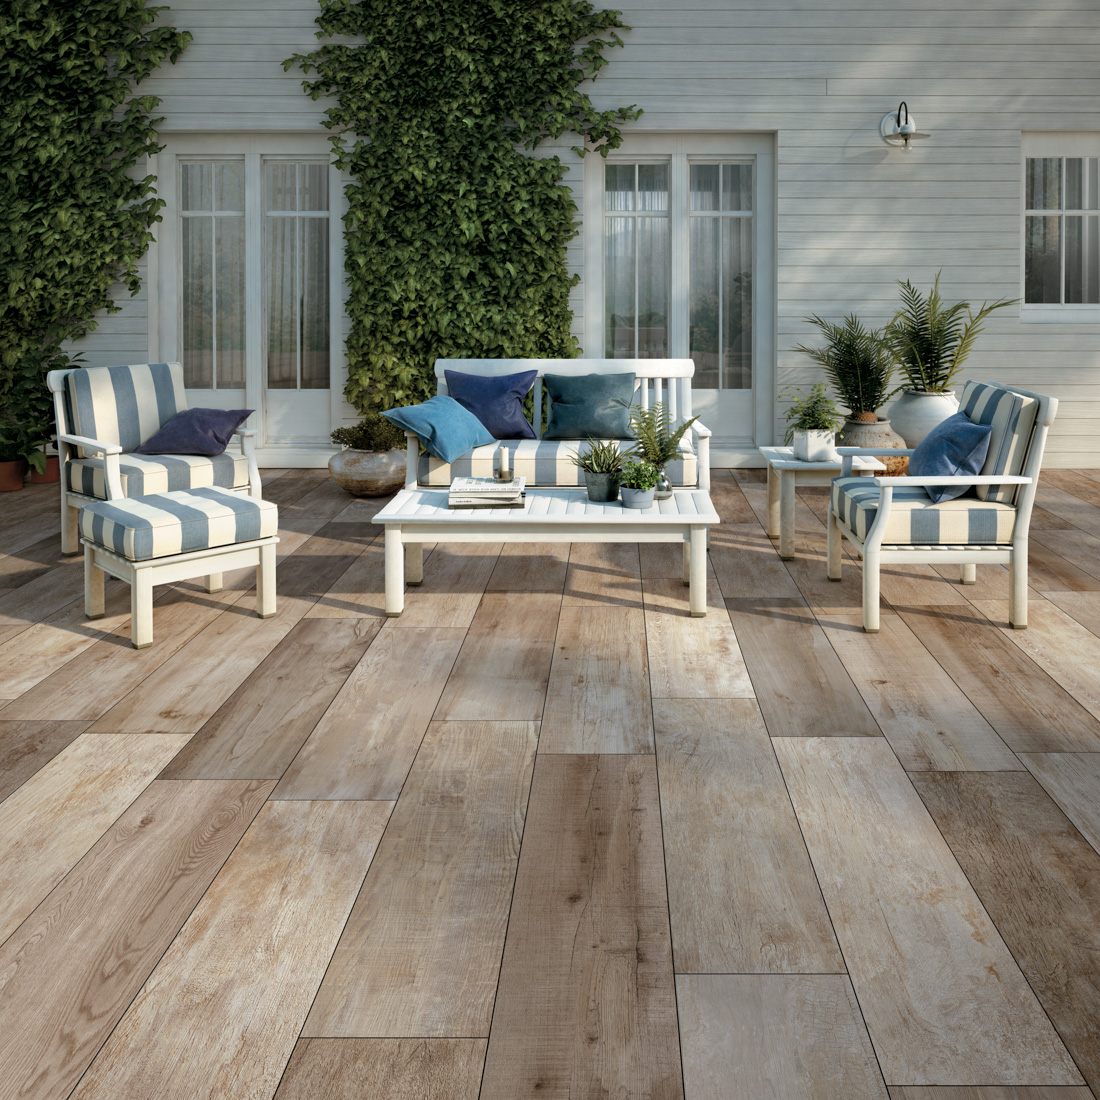 Gartenplatten + Terrassenplatten Holz beige 20x120x2 INTENSIV WOOD